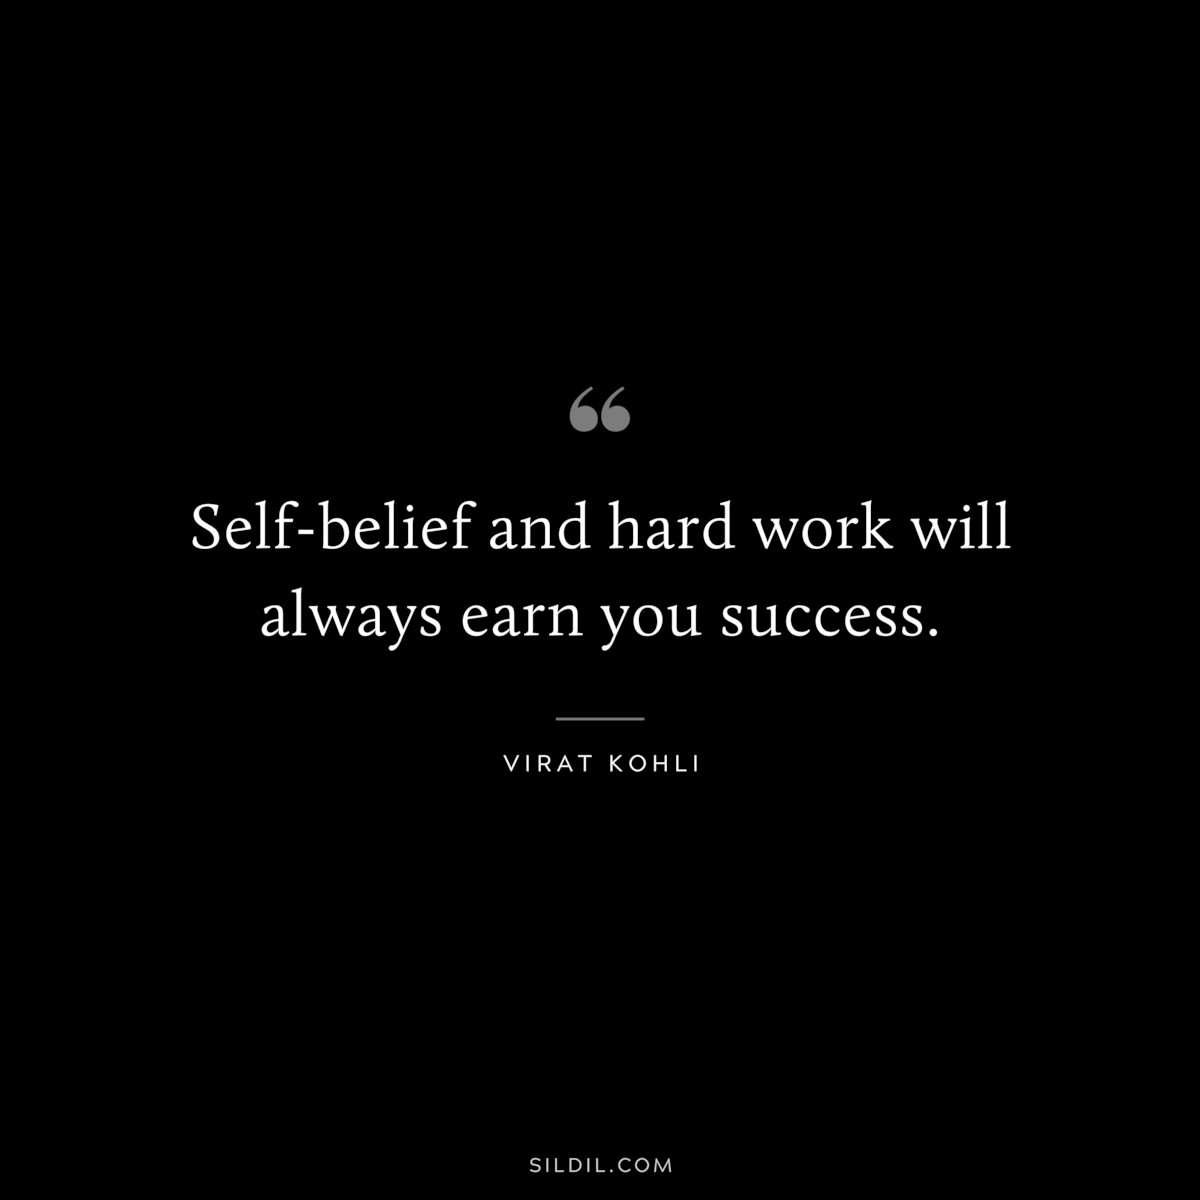 Self-belief and hard work will always earn you success. ― Virat Kohli